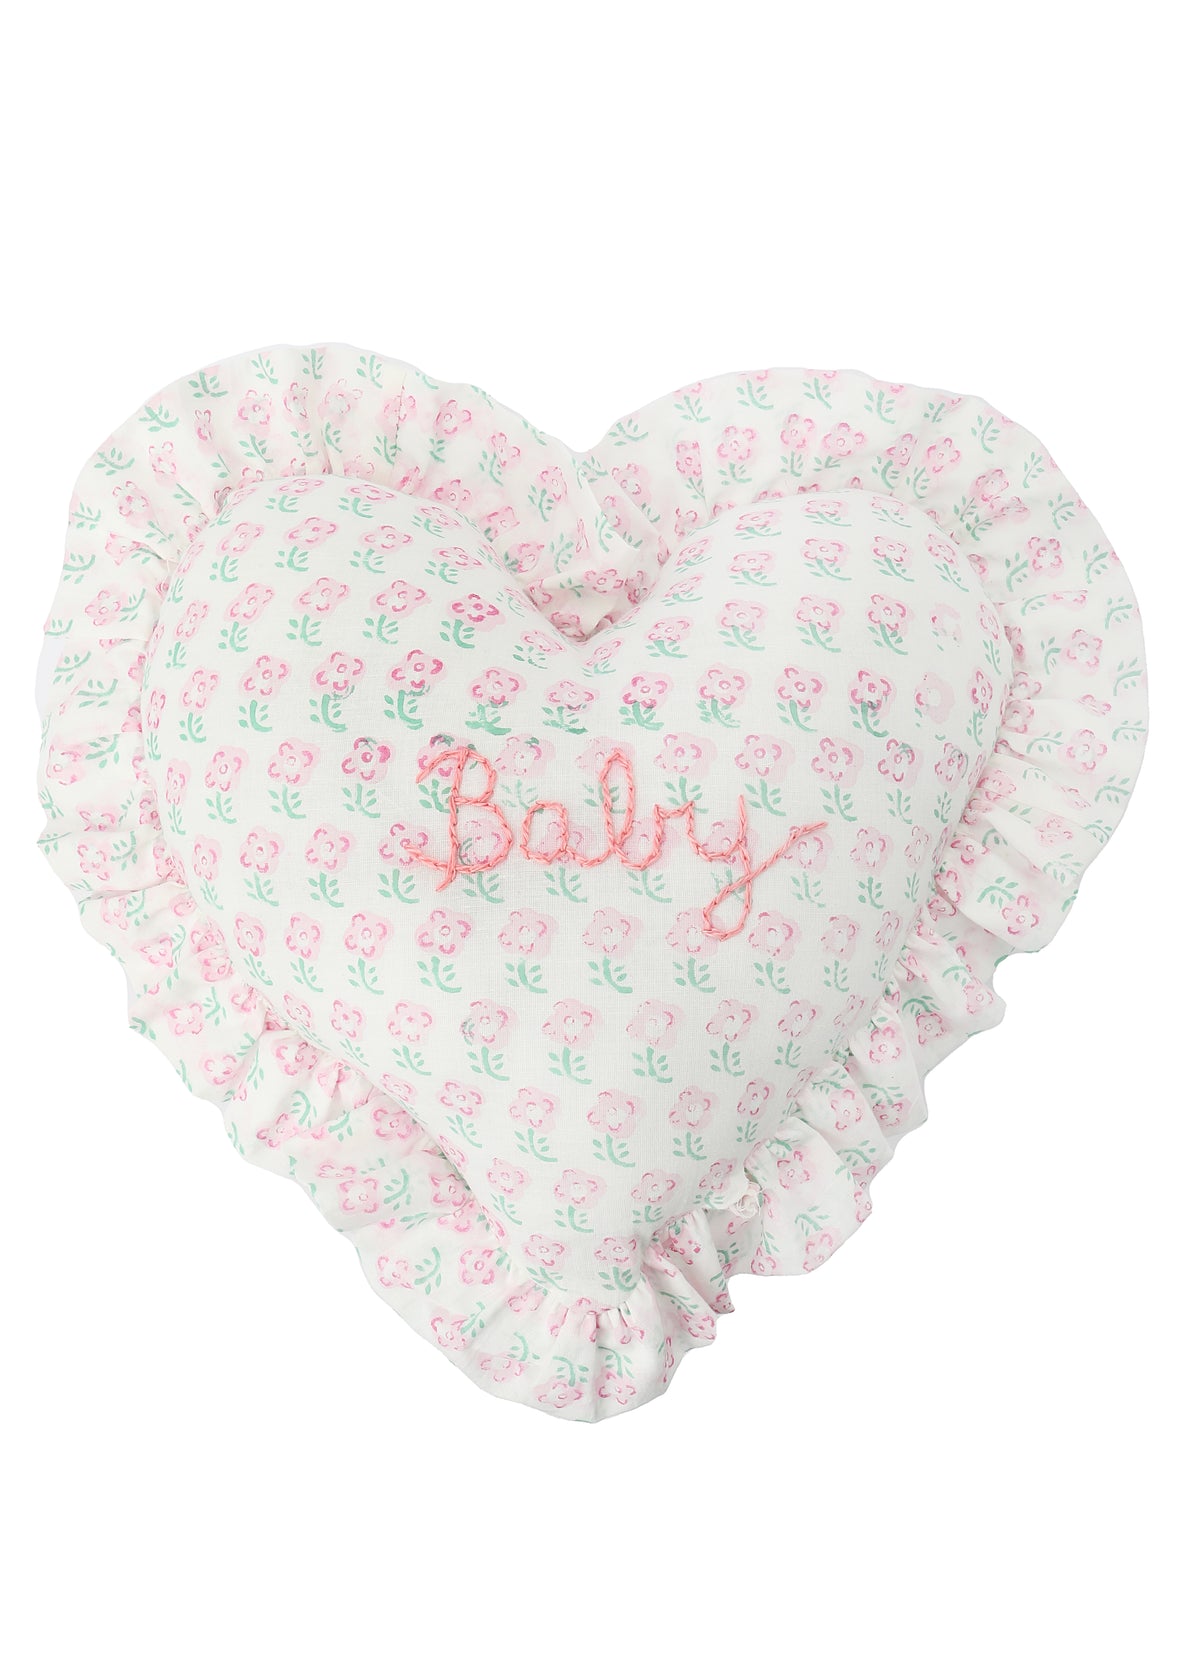 Baby Heart Ruffle Pillow